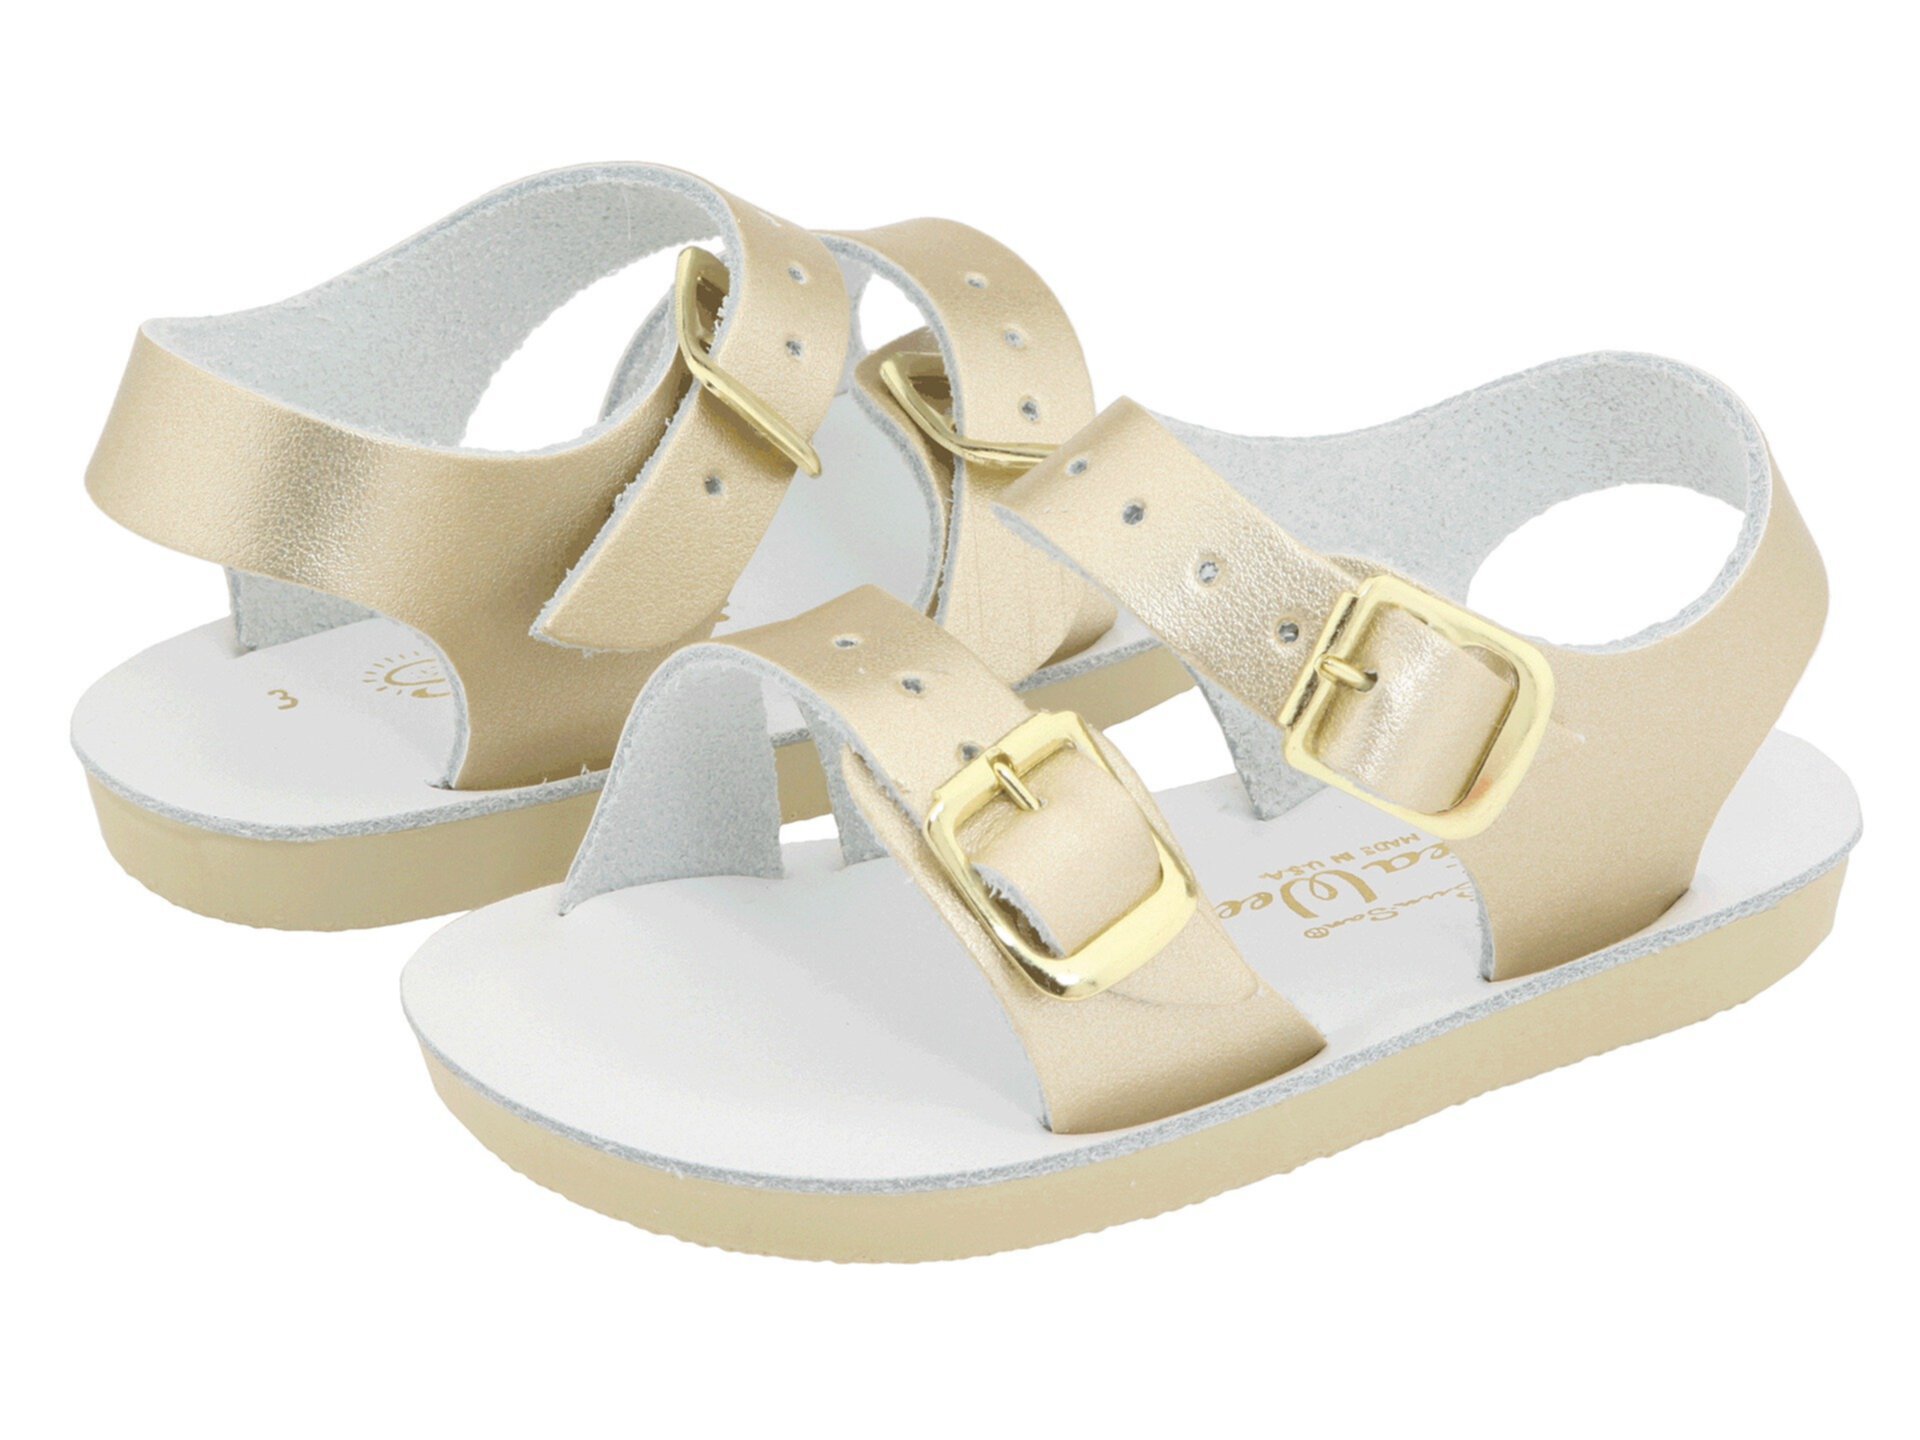 Сан-Сан - Морские водоросли (младенцы / малыши) Salt Water Sandal by Hoy Shoes